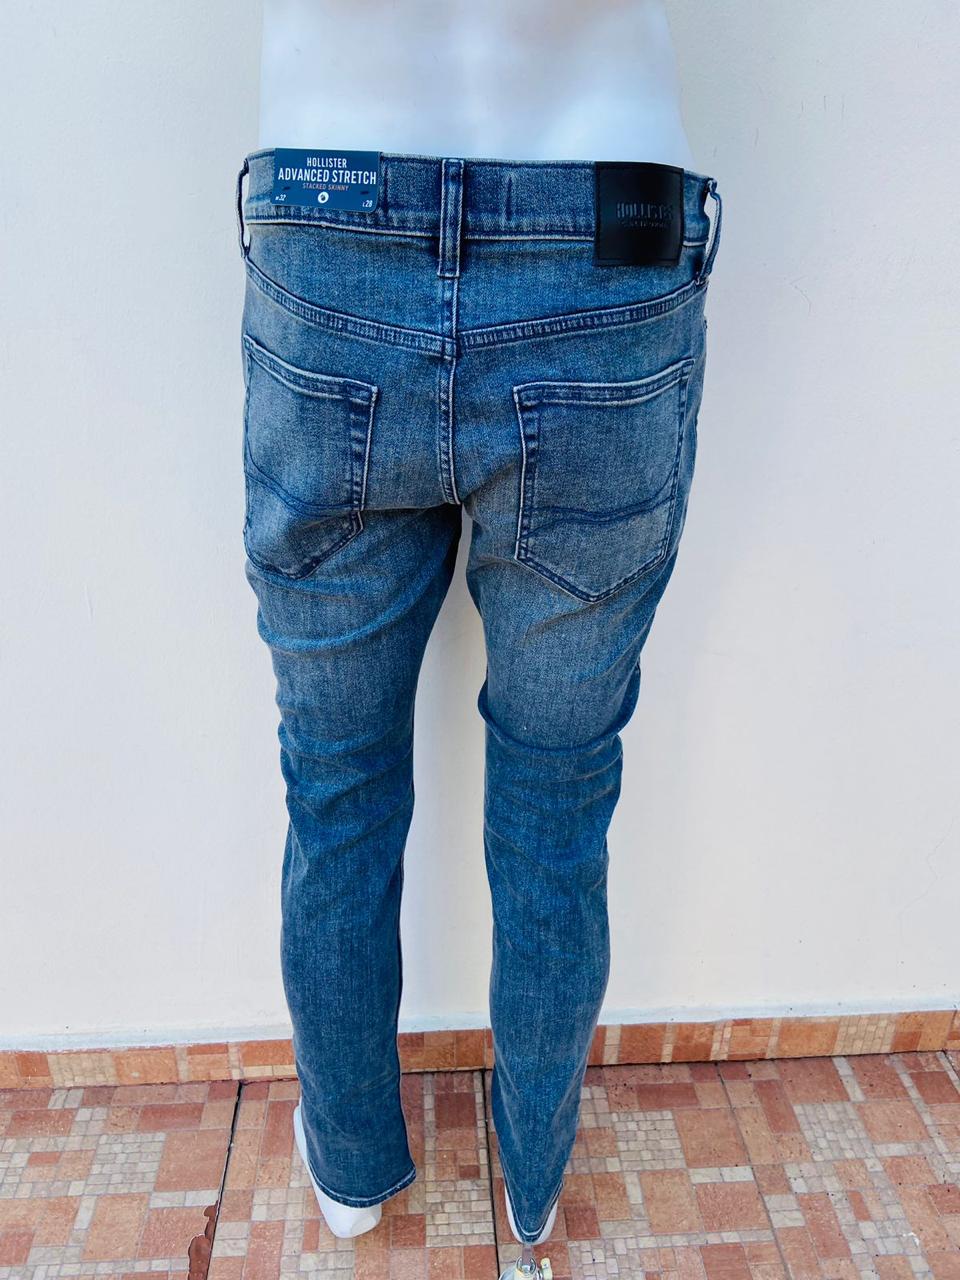 Pantalon Hollister original azul poco degradado con rasgado tapados  ADVANCED STRECH STACKED SKINNY